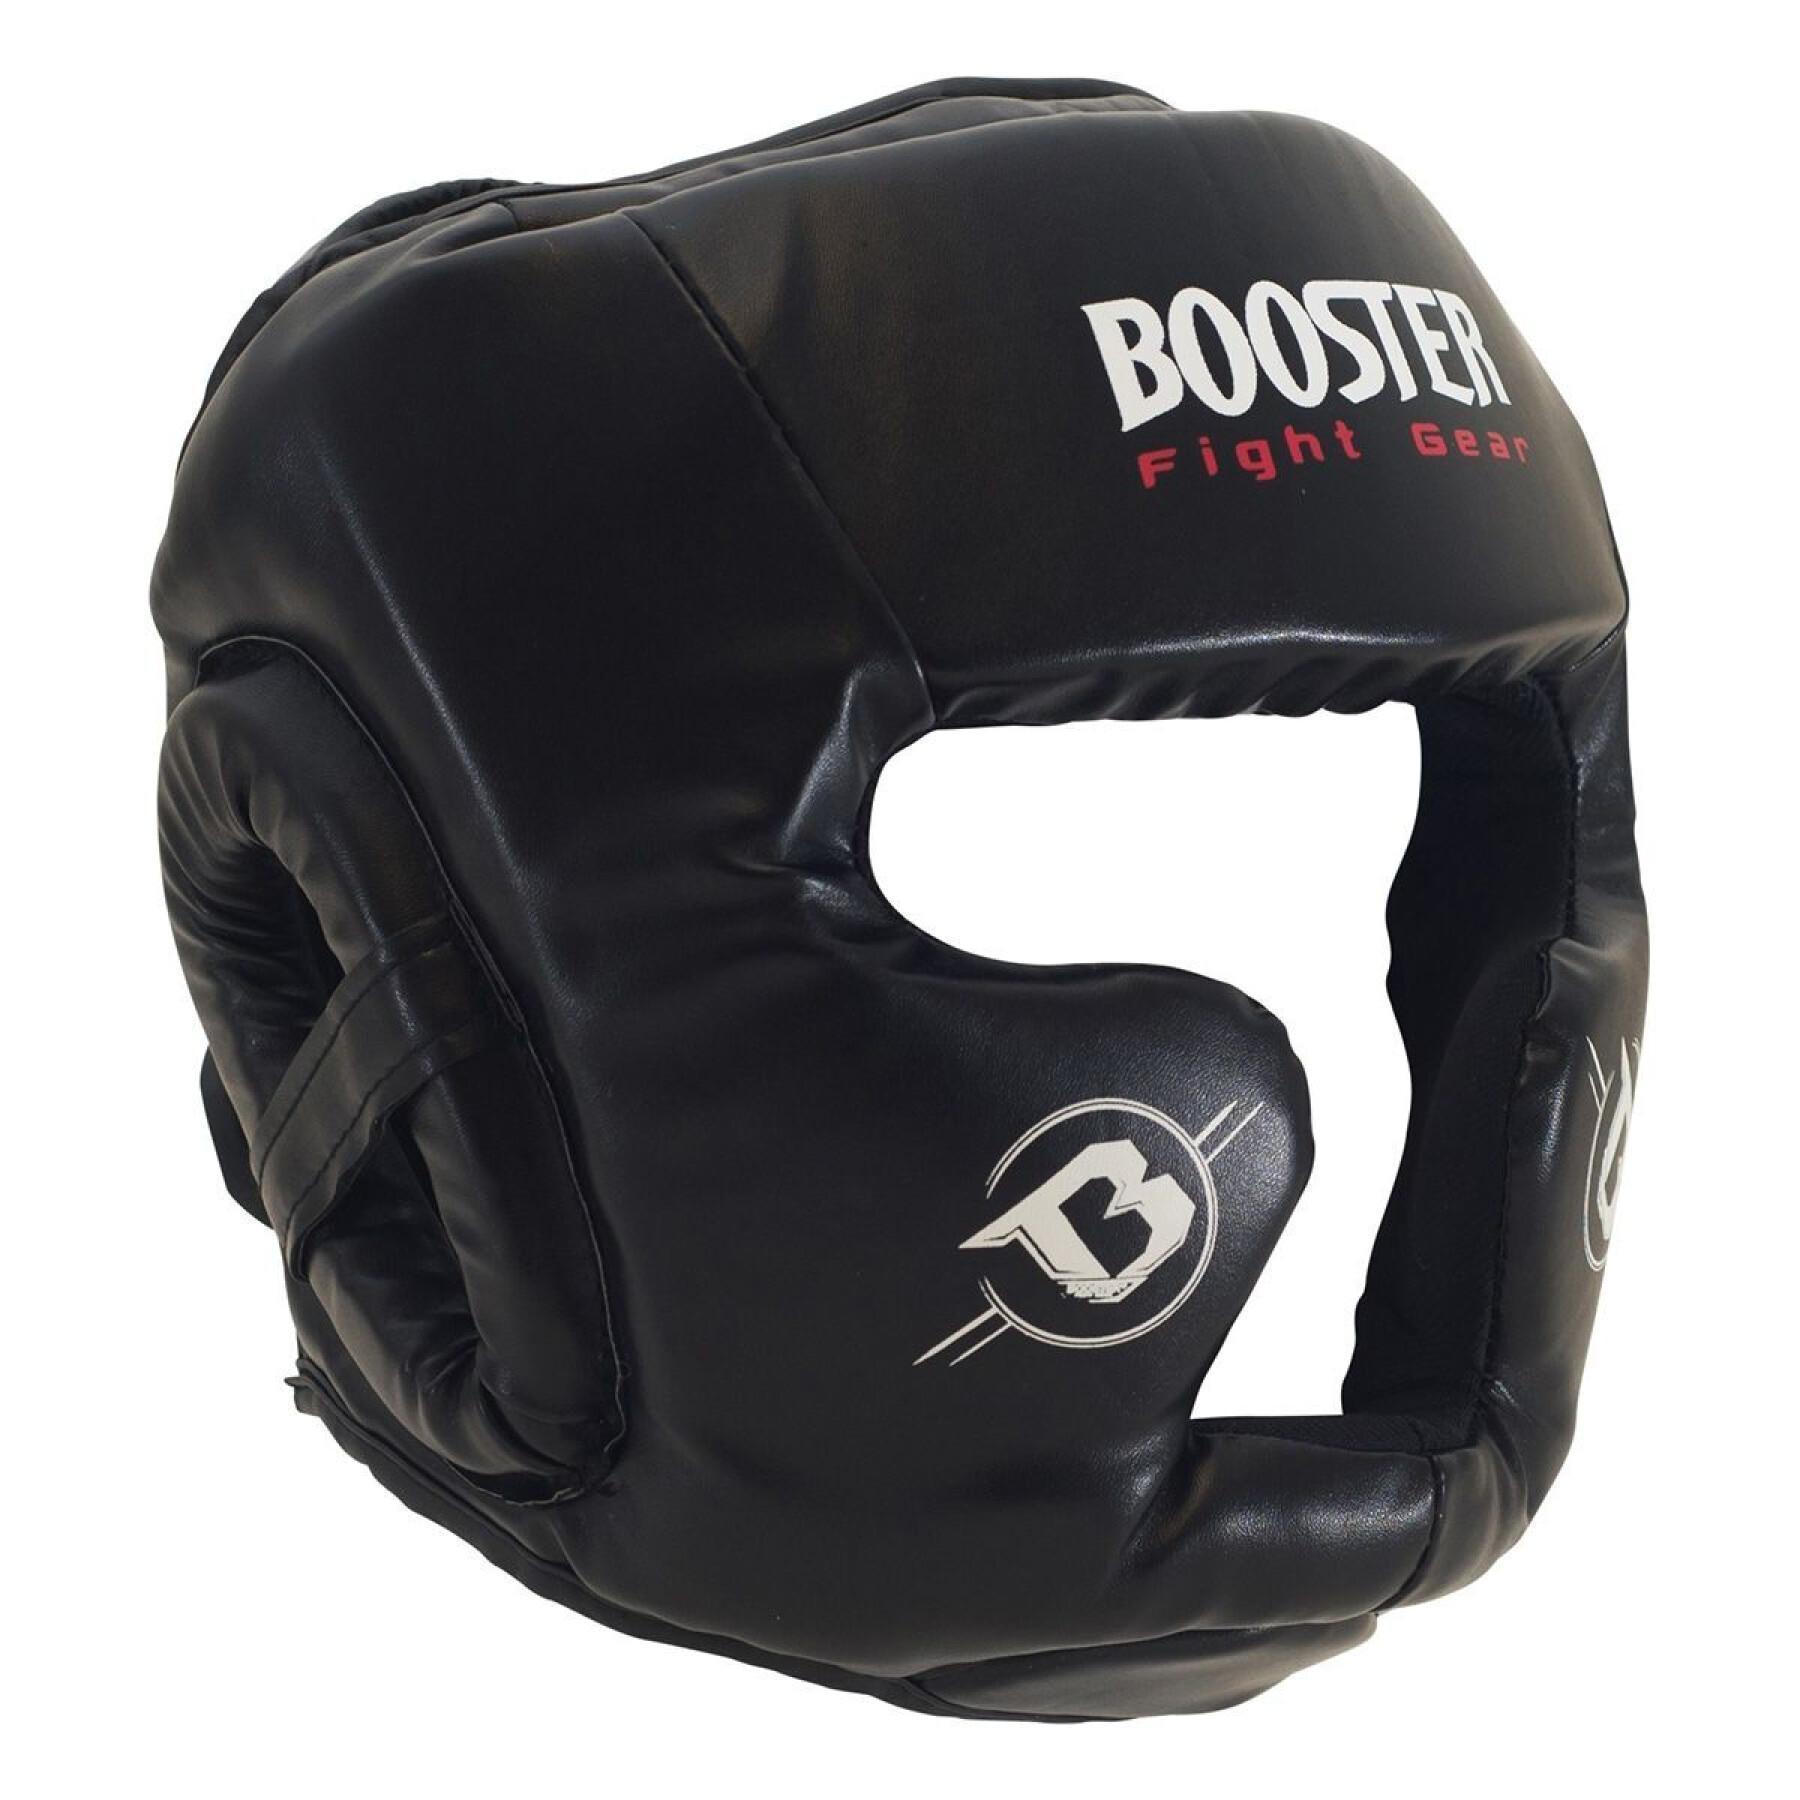 Casque boxe Booster Fight Gear Hgl B 2